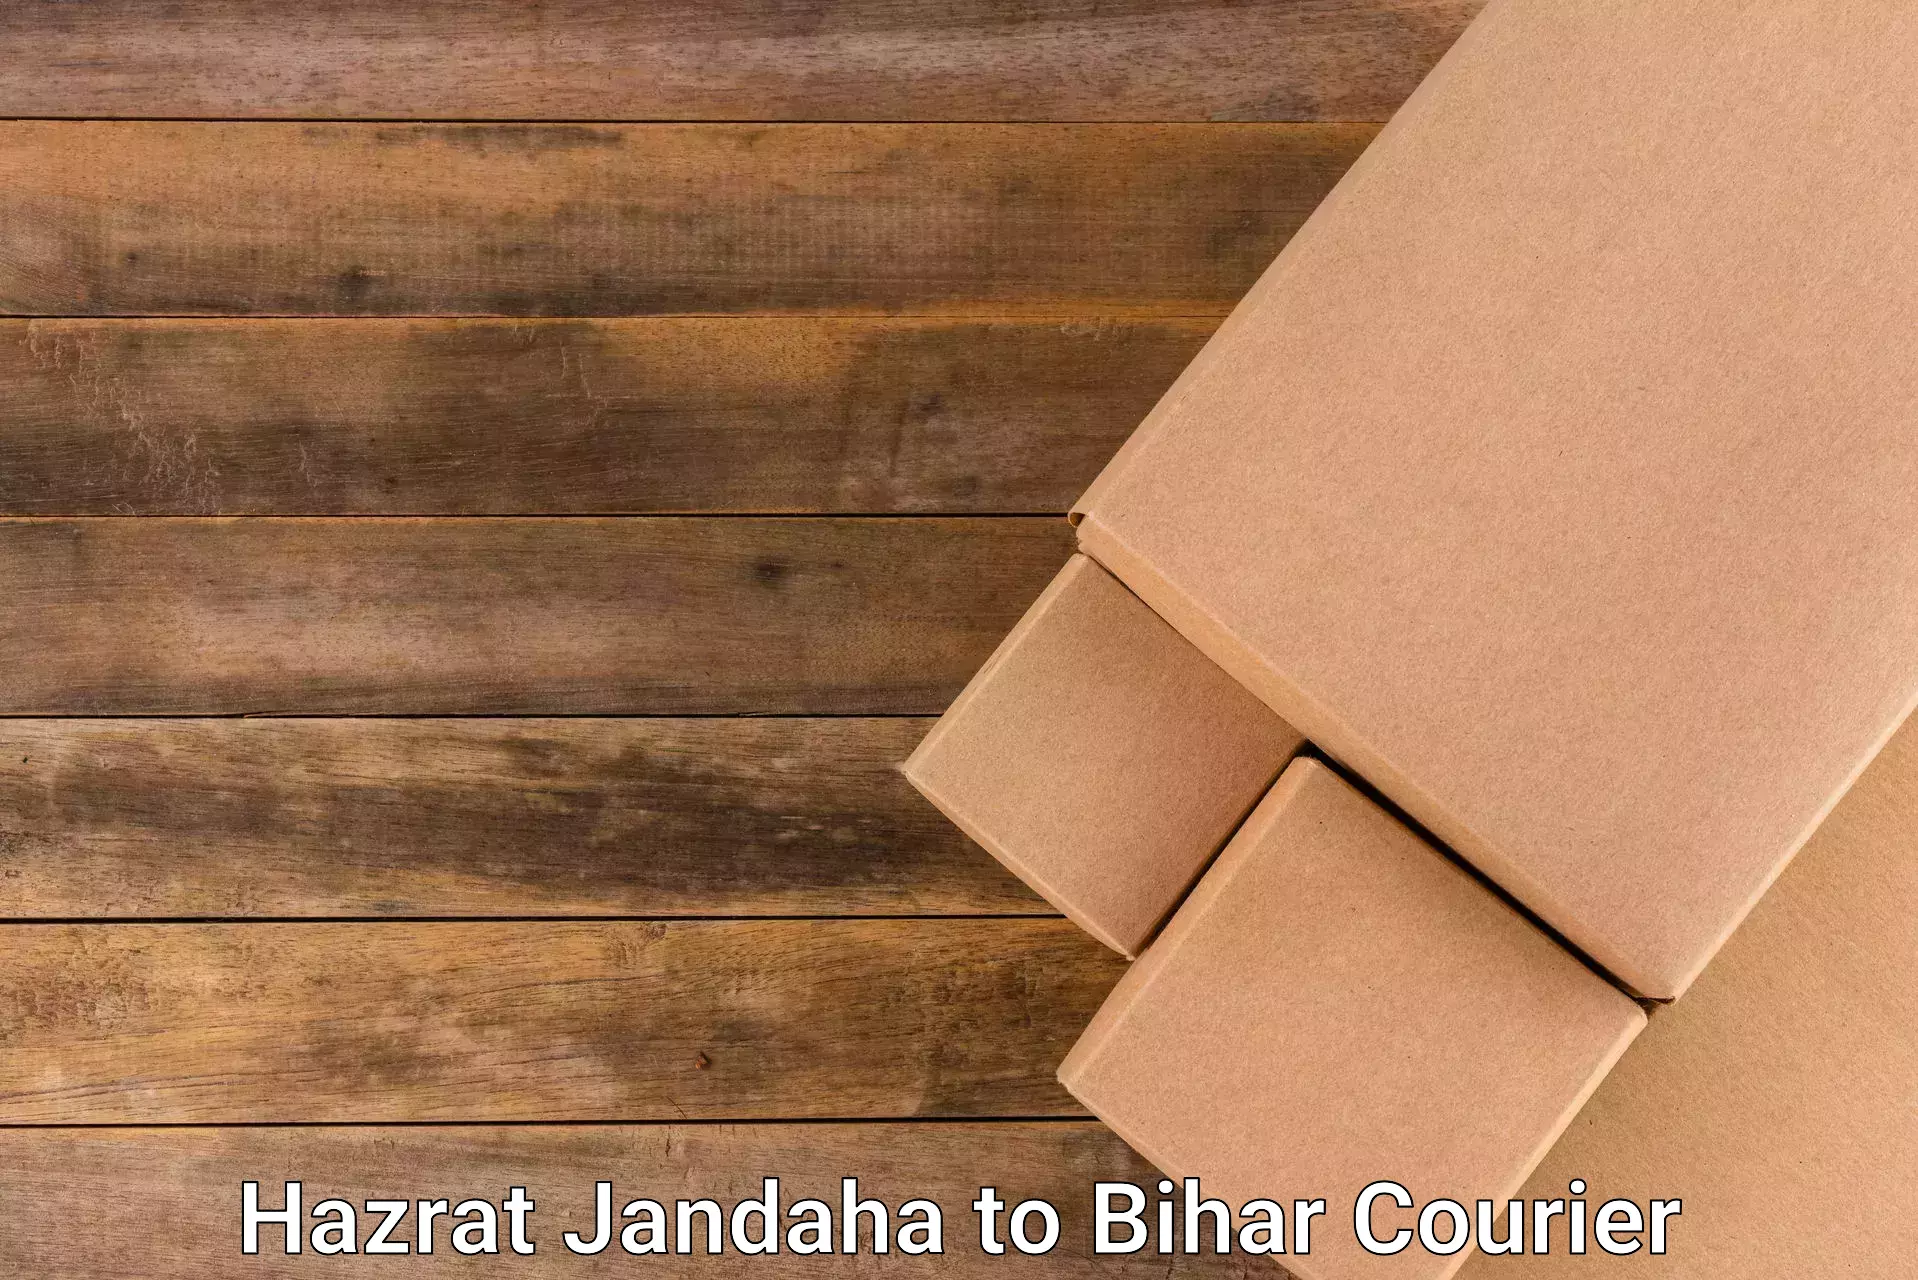 Courier service innovation Hazrat Jandaha to Kochas